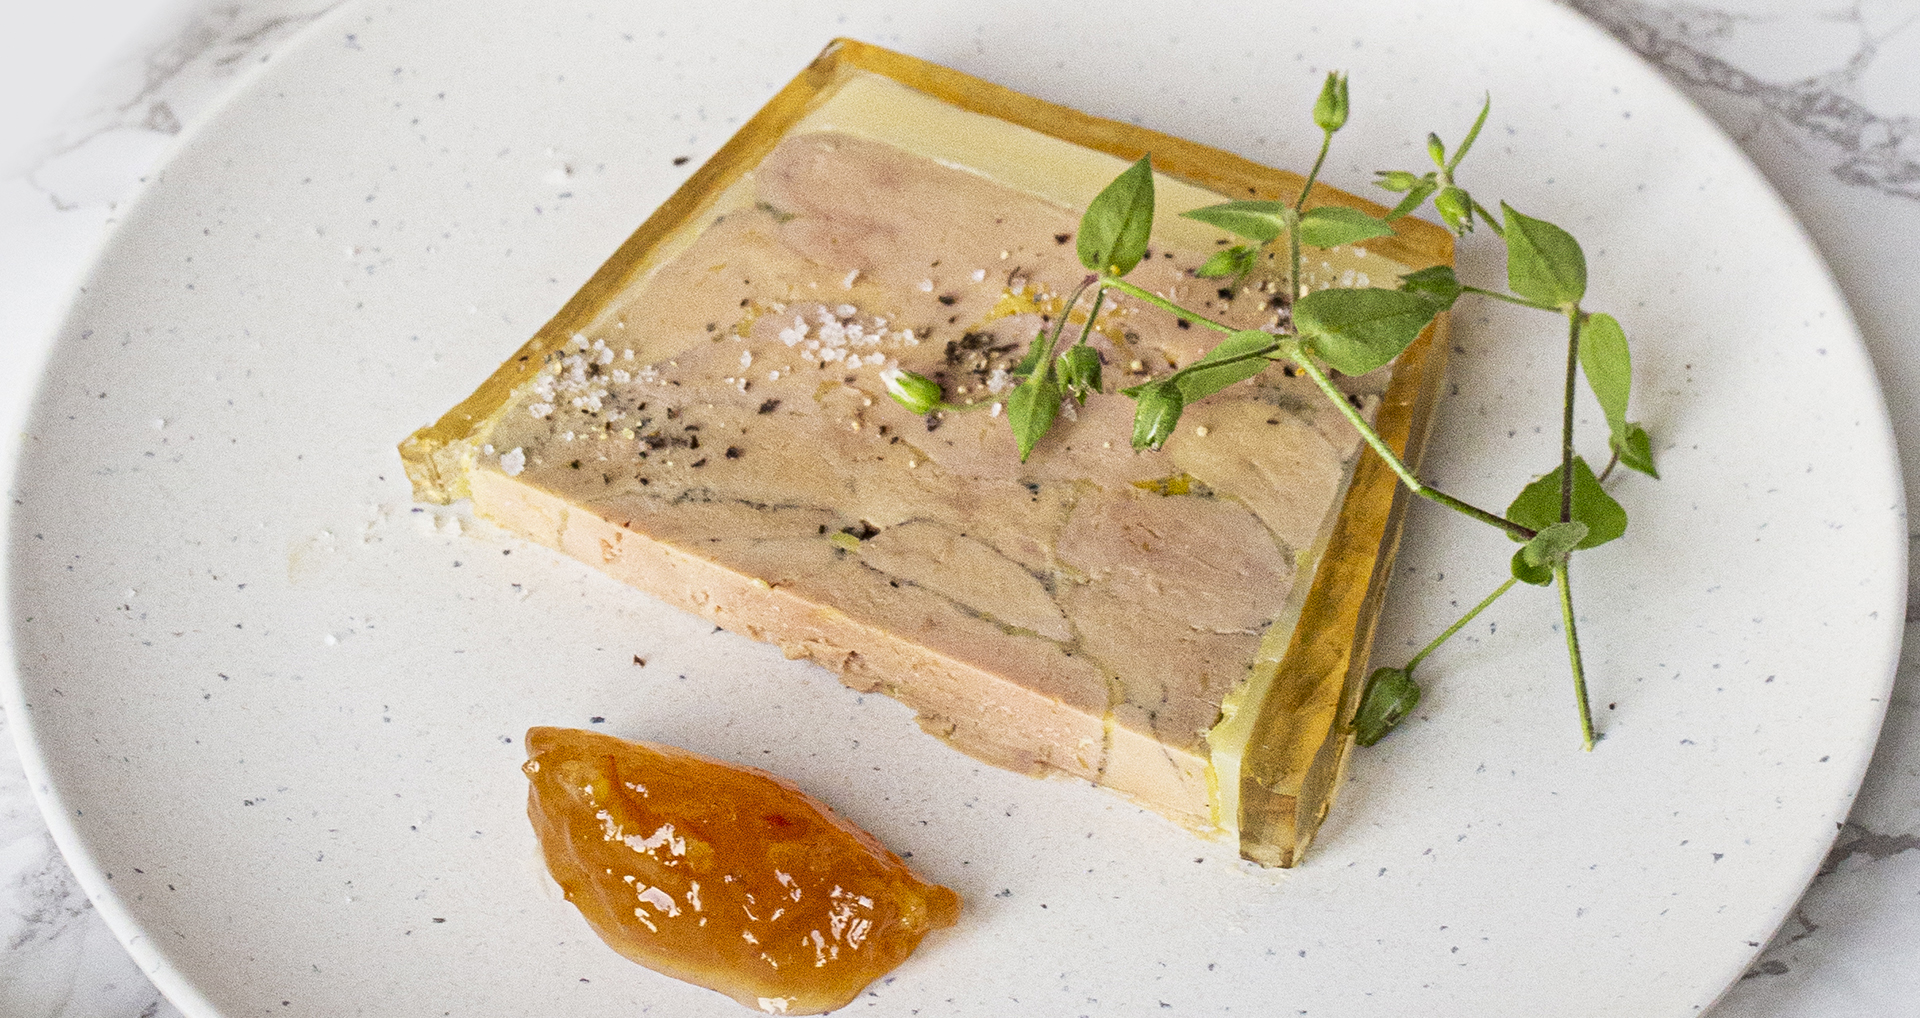 Foie gras & chutney – G.H.Mumm